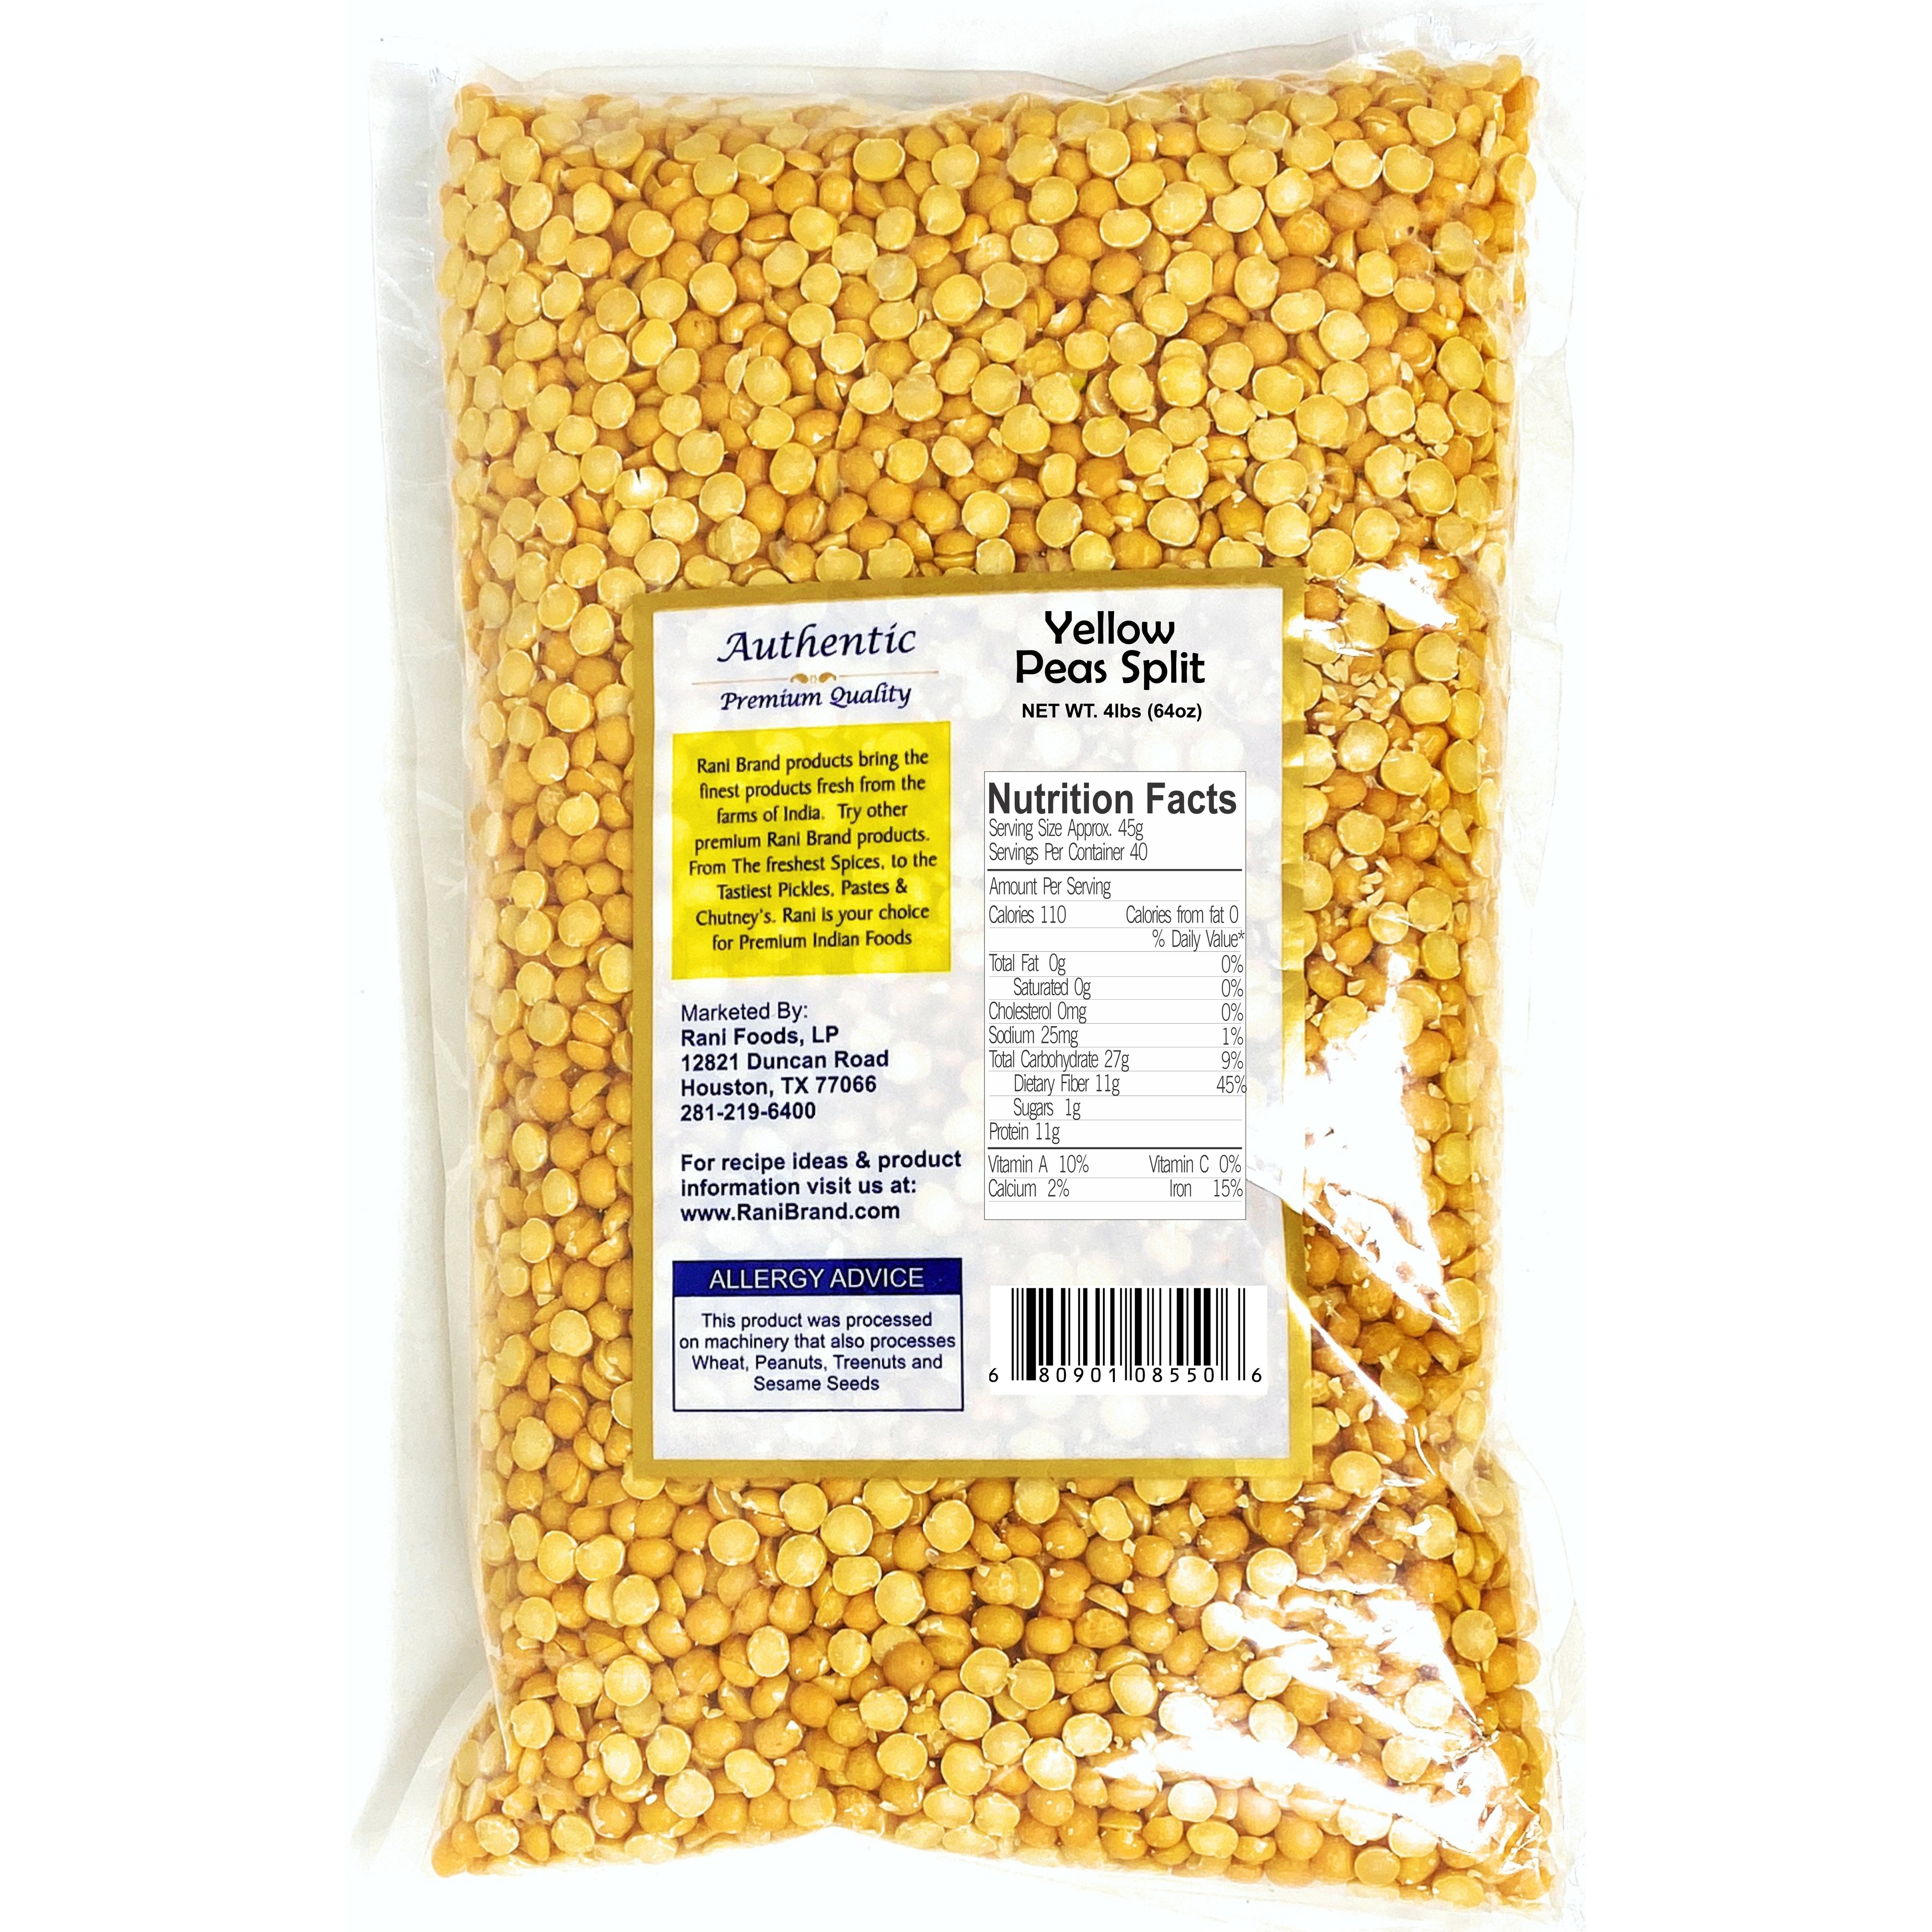 Rani Yellow Peas Split, Dried (Vatana, Matar) 4lbs (64oz) ~ All Natural | Vegan | Gluten Friendly | Product of USA???